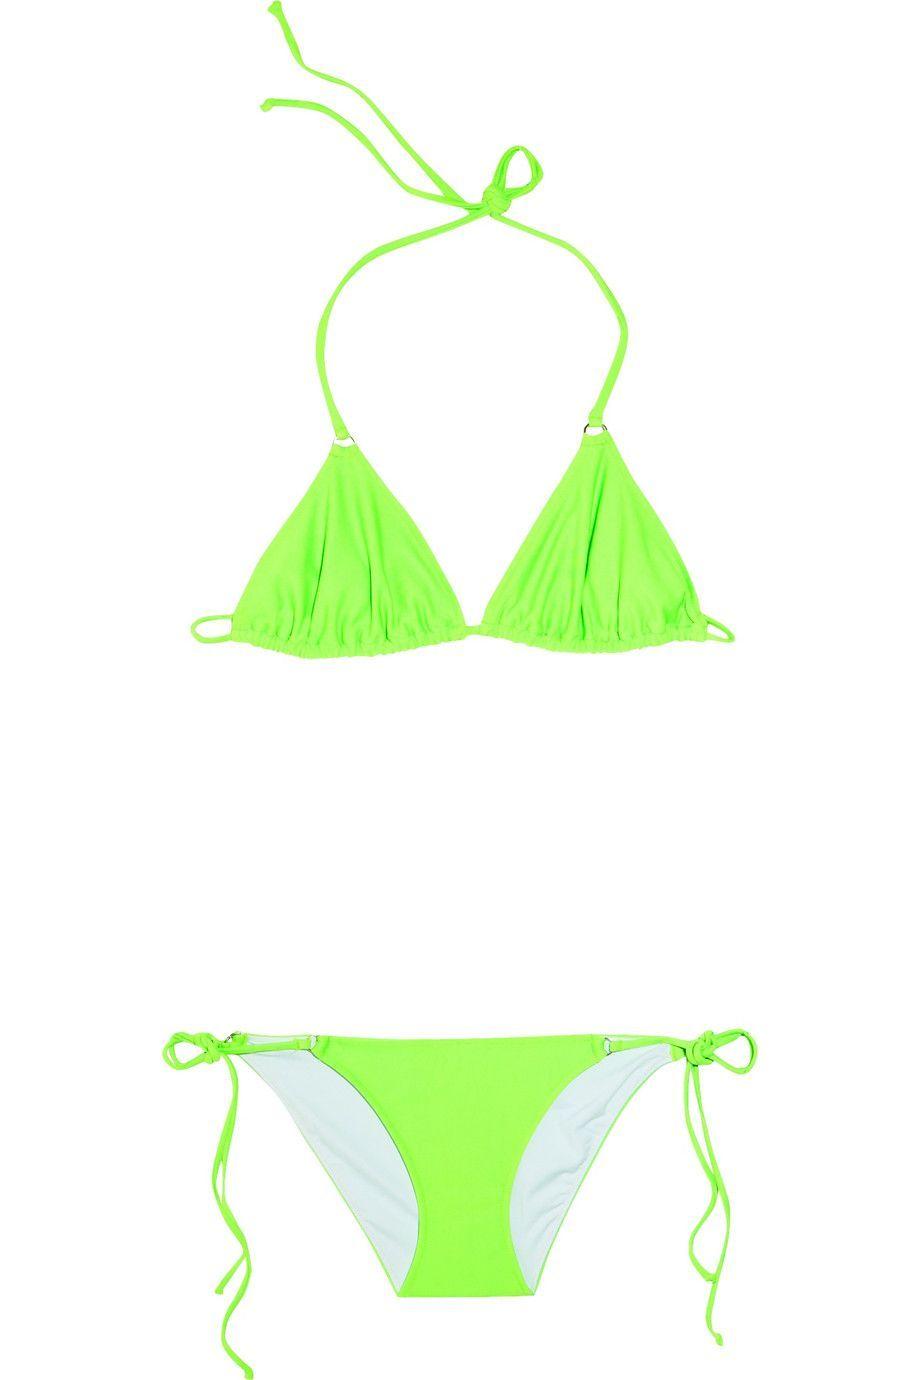 Neon Green Triangle Logo - shimmi neon green birkin triangle bikini | Neon & Color | Bikinis ...